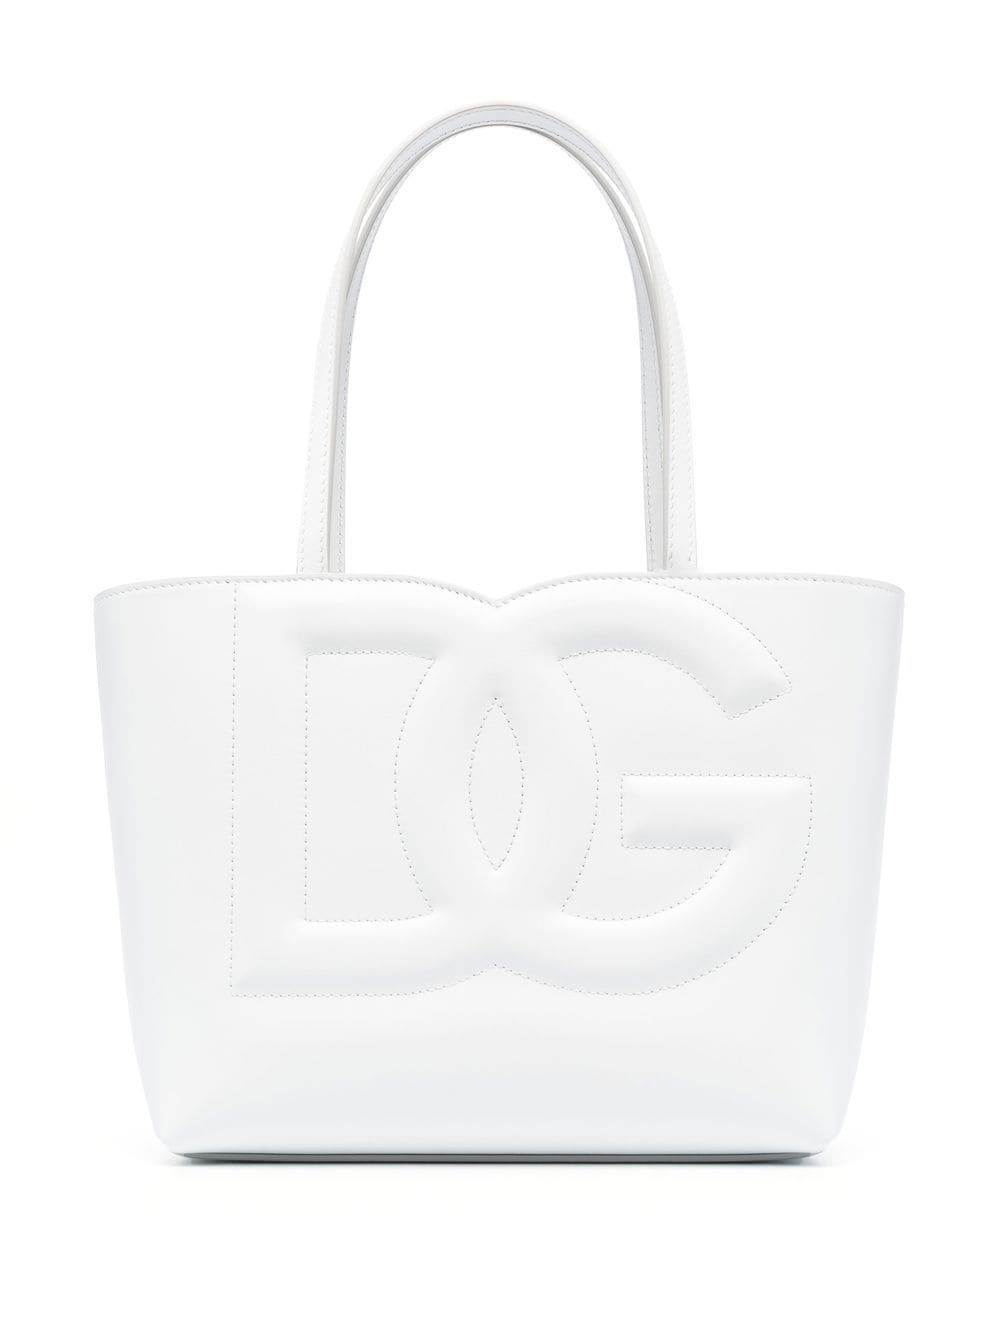 Dolce & Gabbana Dg Logo Leather Tote Bag In White | ModeSens